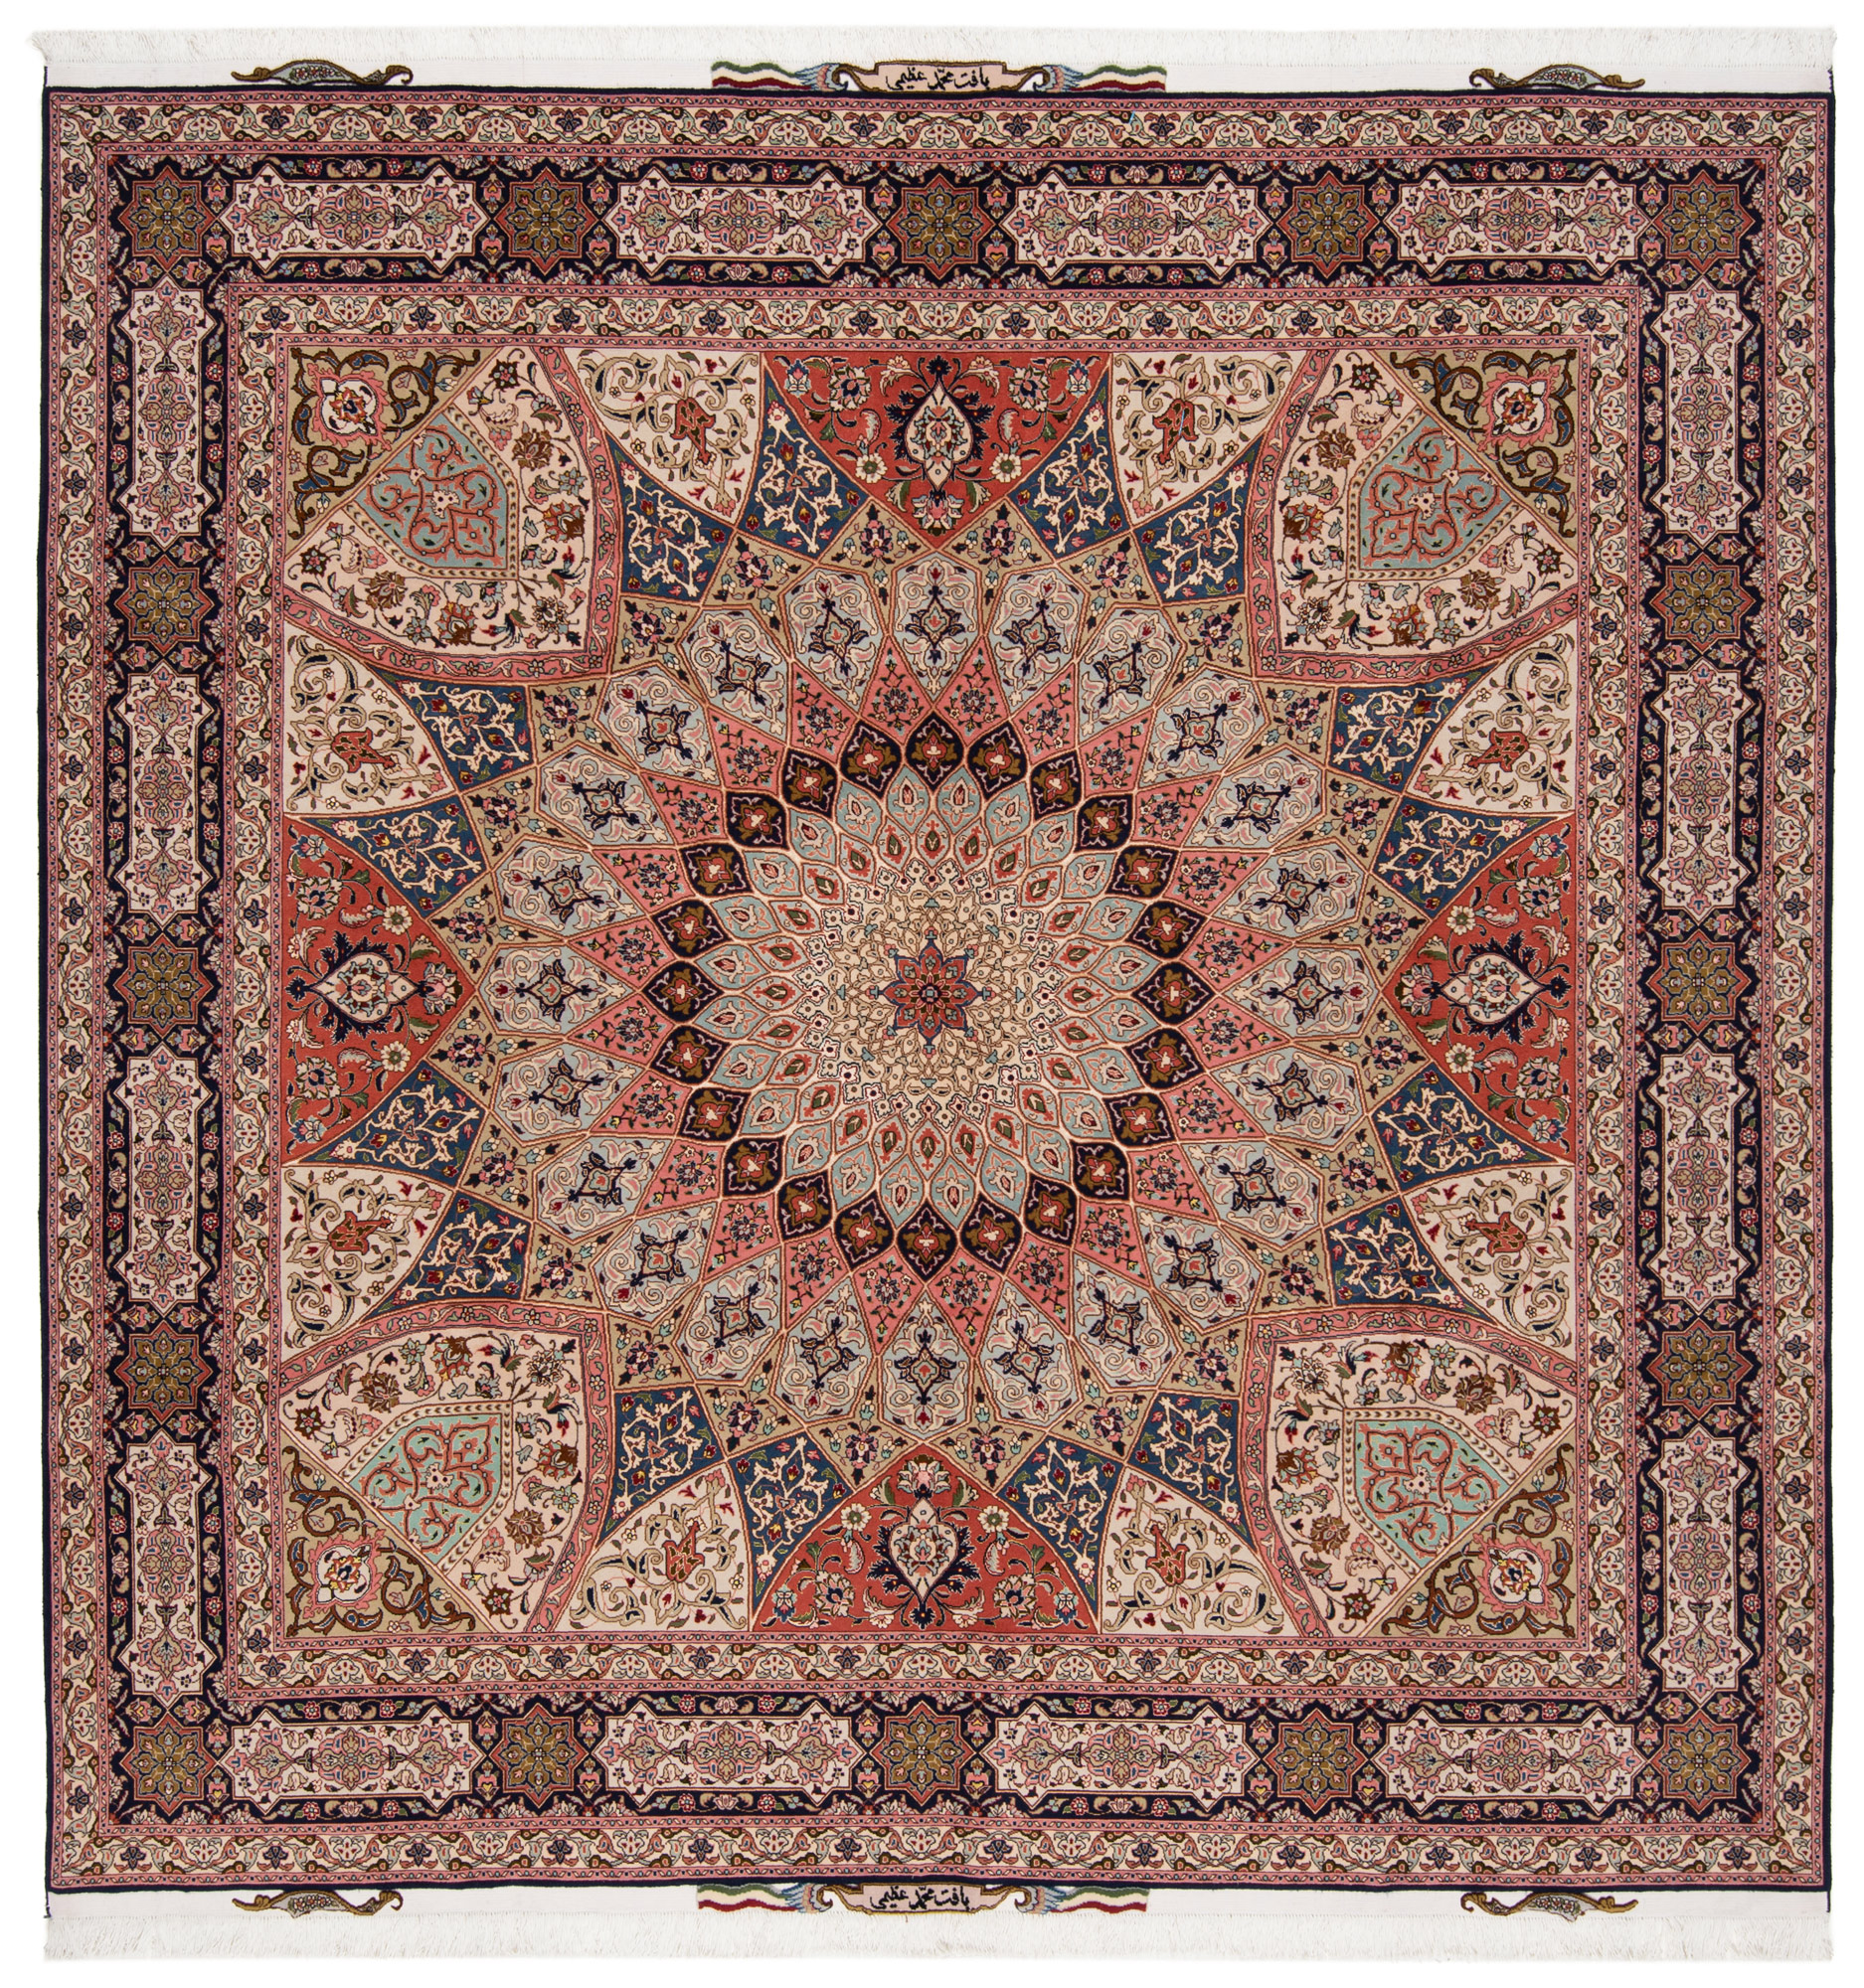 Persian Carpet Materials in Materials - UE Marketplace